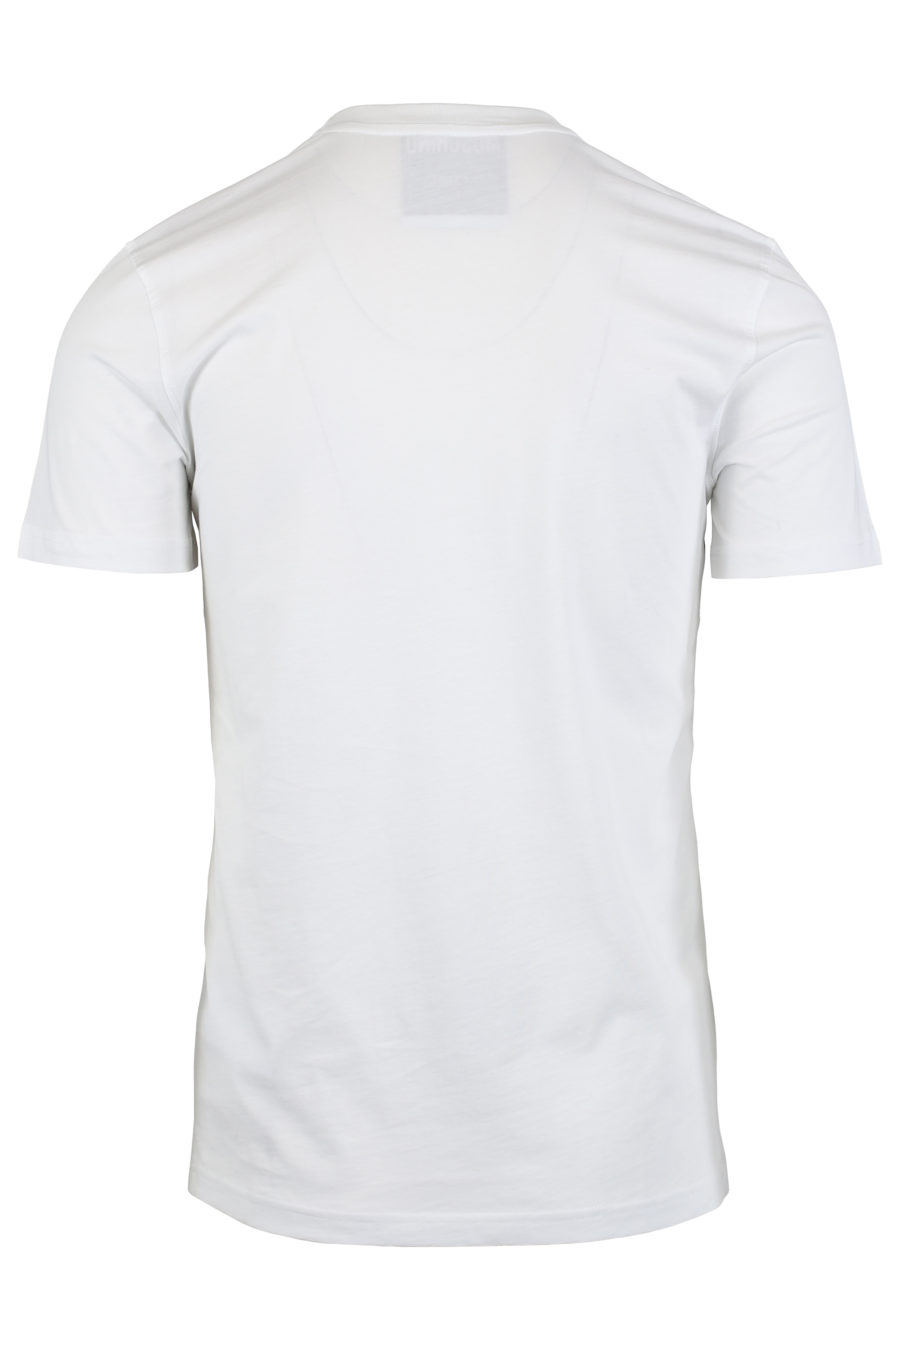 Camiseta blanca logo blanco y negro - IMG 0880